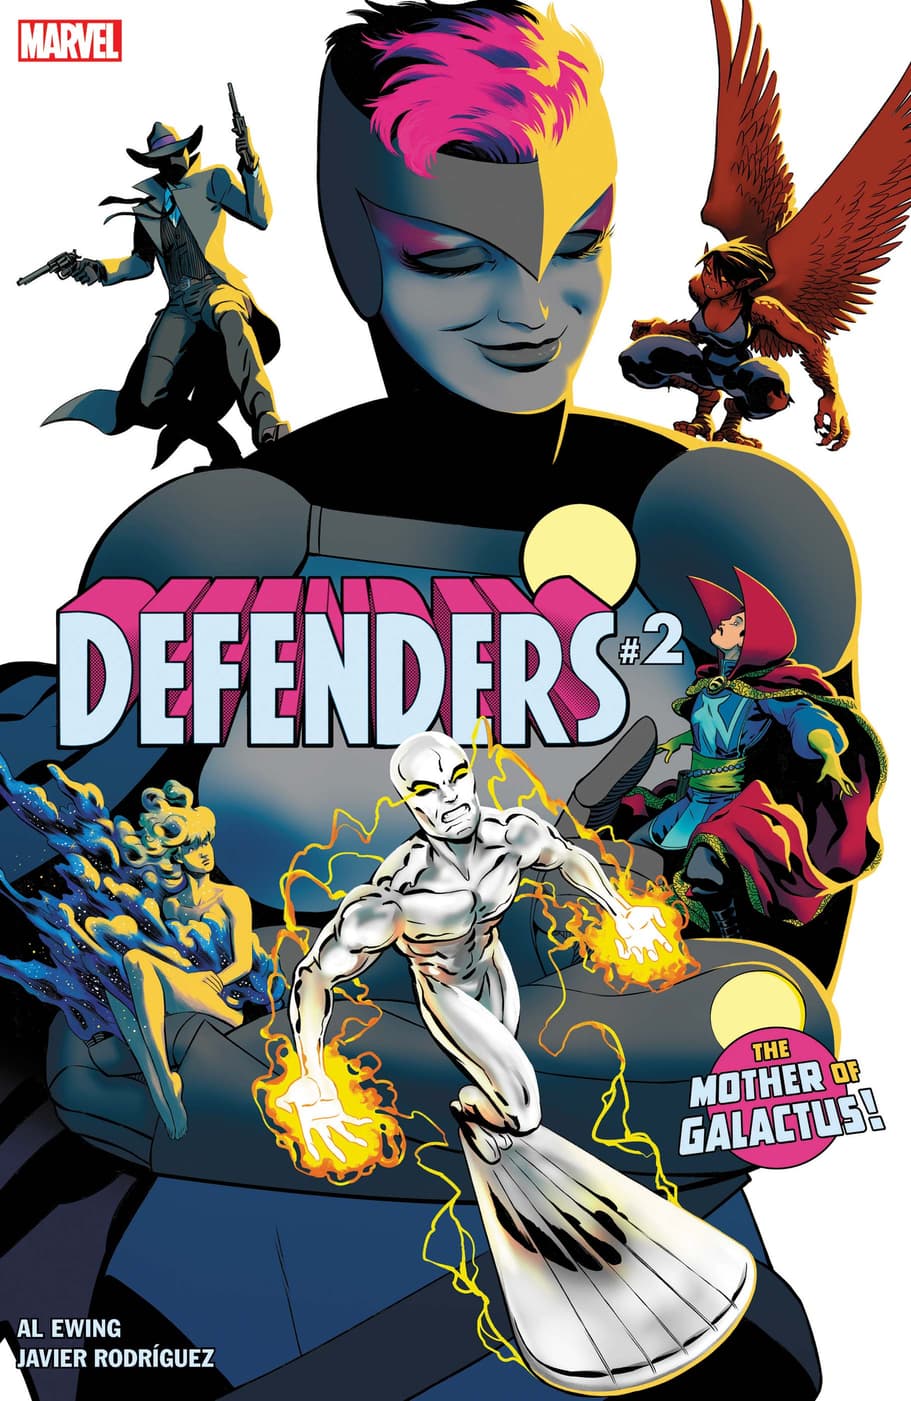 DEFENDERS #2 cover by Javier Rodriguez